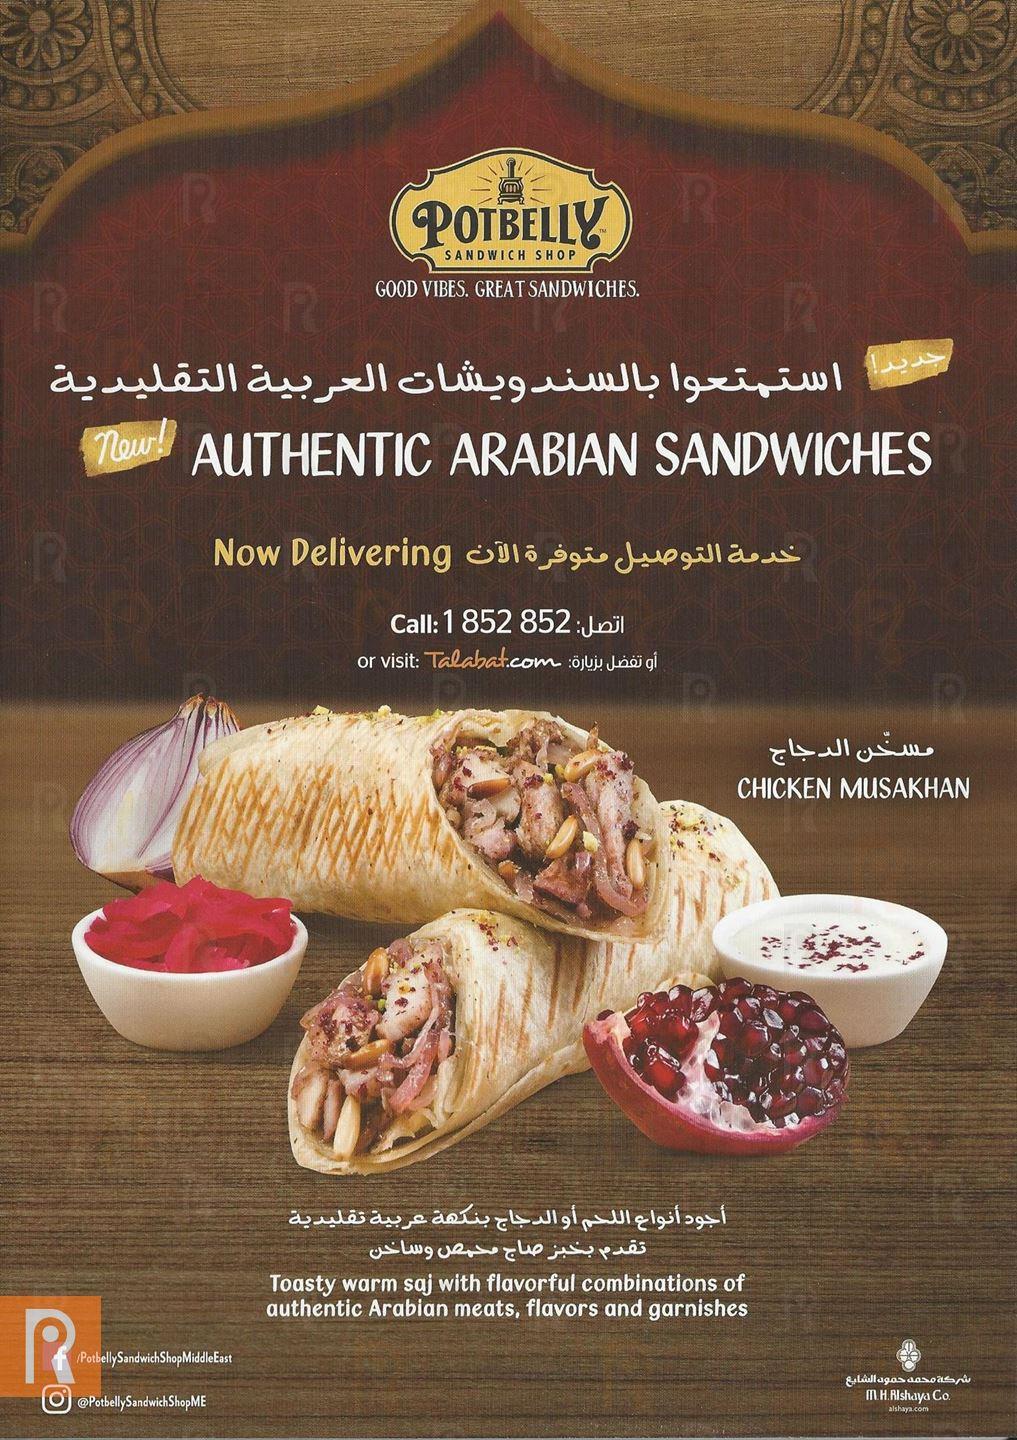 Potbelly Restaurant Authentic Arabian Sandwiches Menu